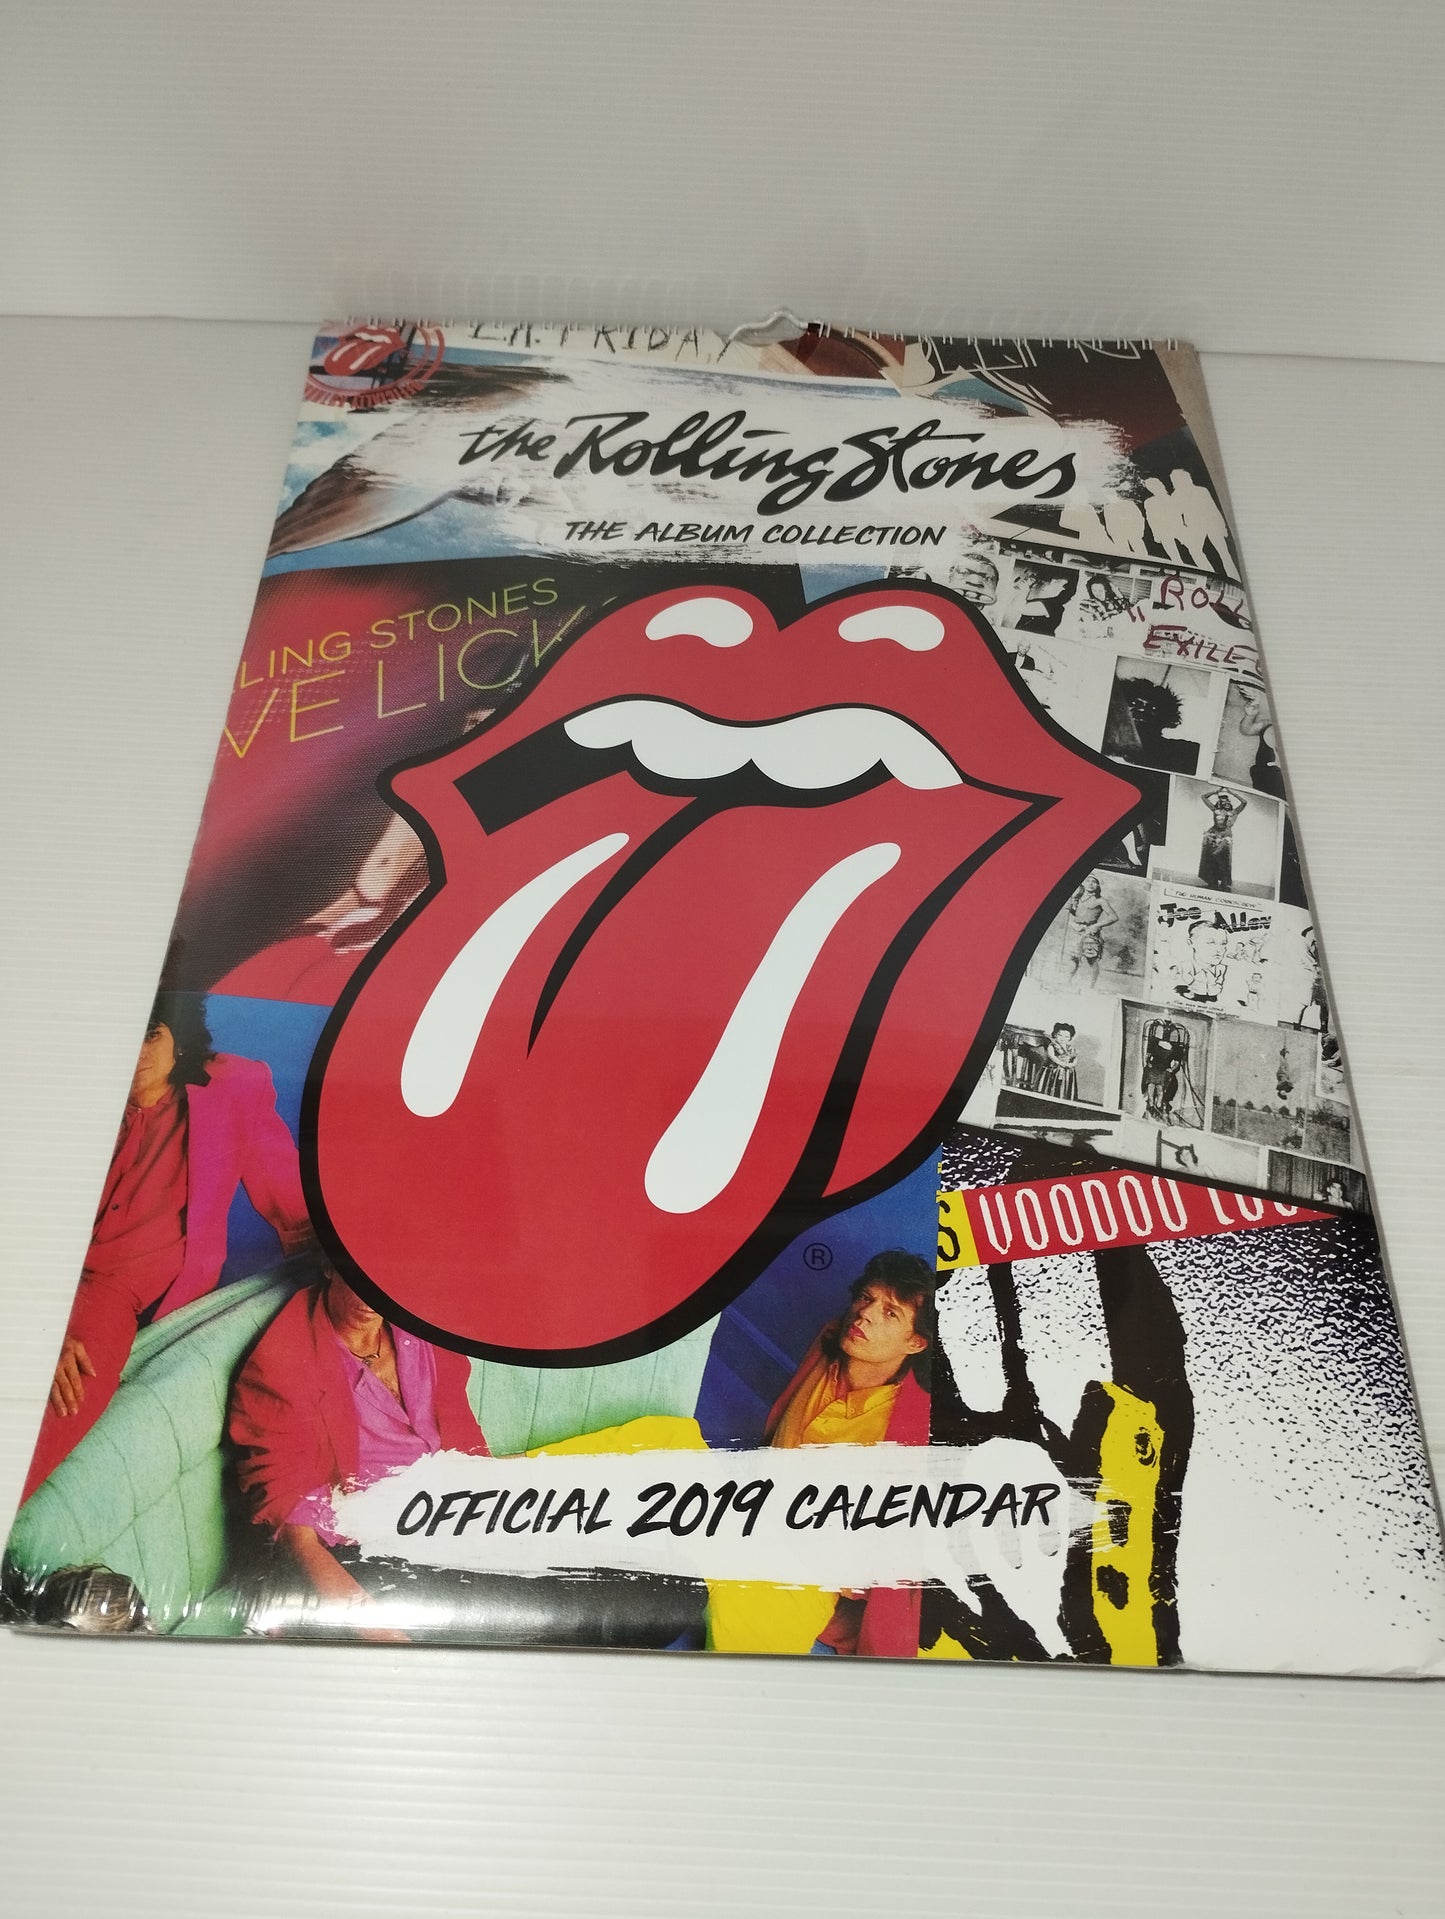 The Rolling Stones Calendario Ufficiale 2019
Printed in UK